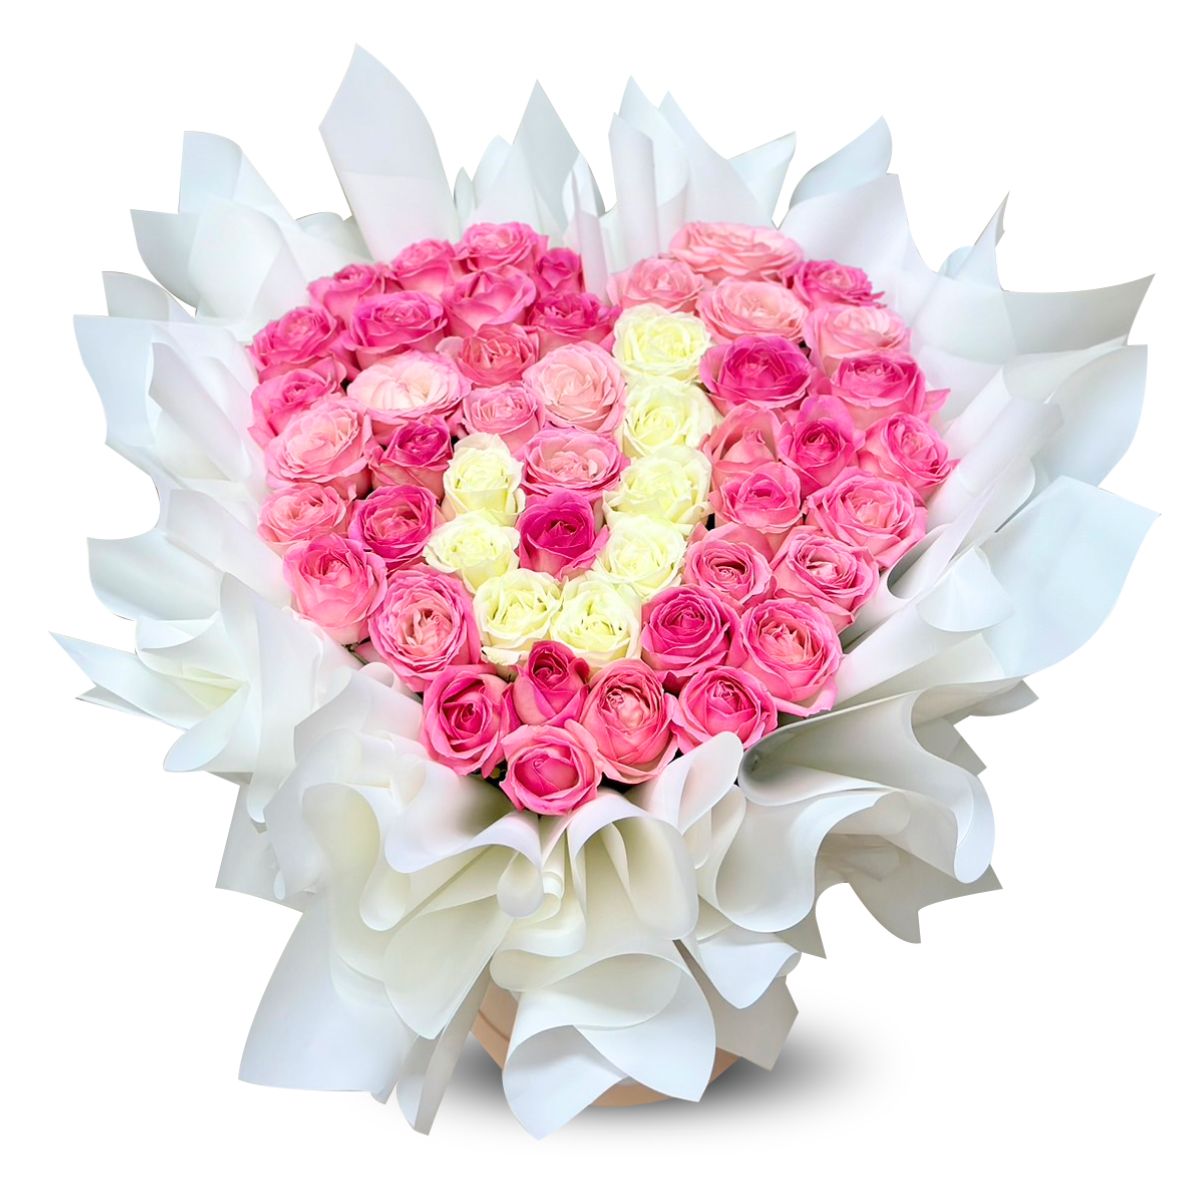 Customized 'Heart You' Flower Box